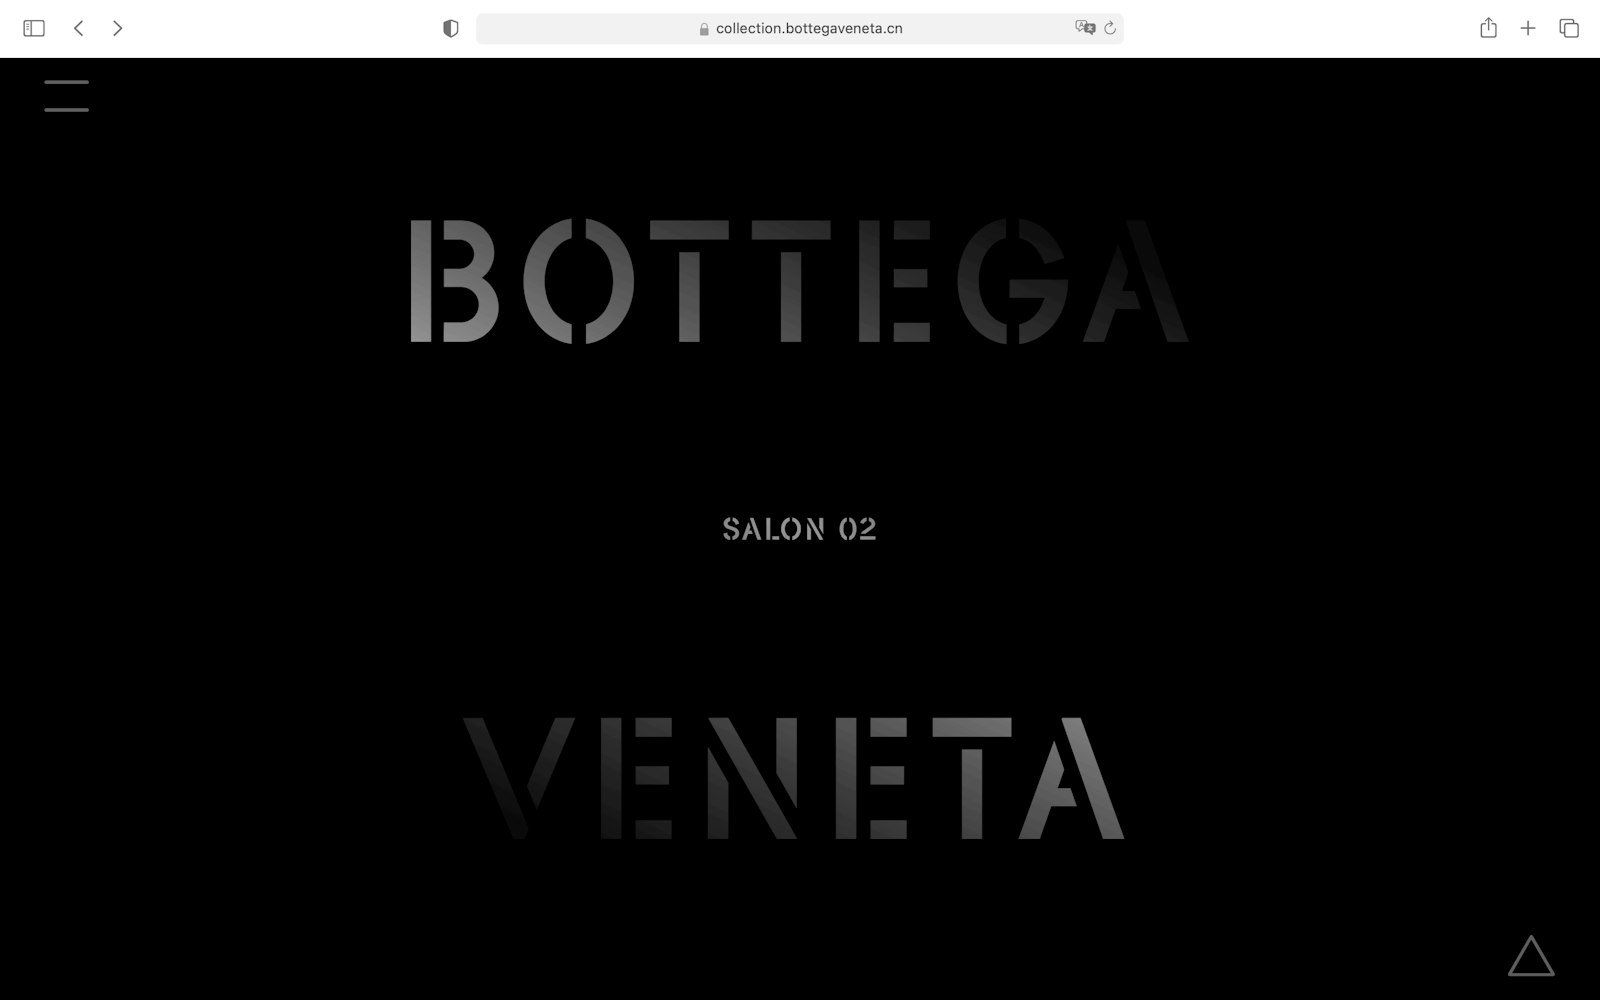 Bottega Veneta's Chinese Seasonal Collection Website